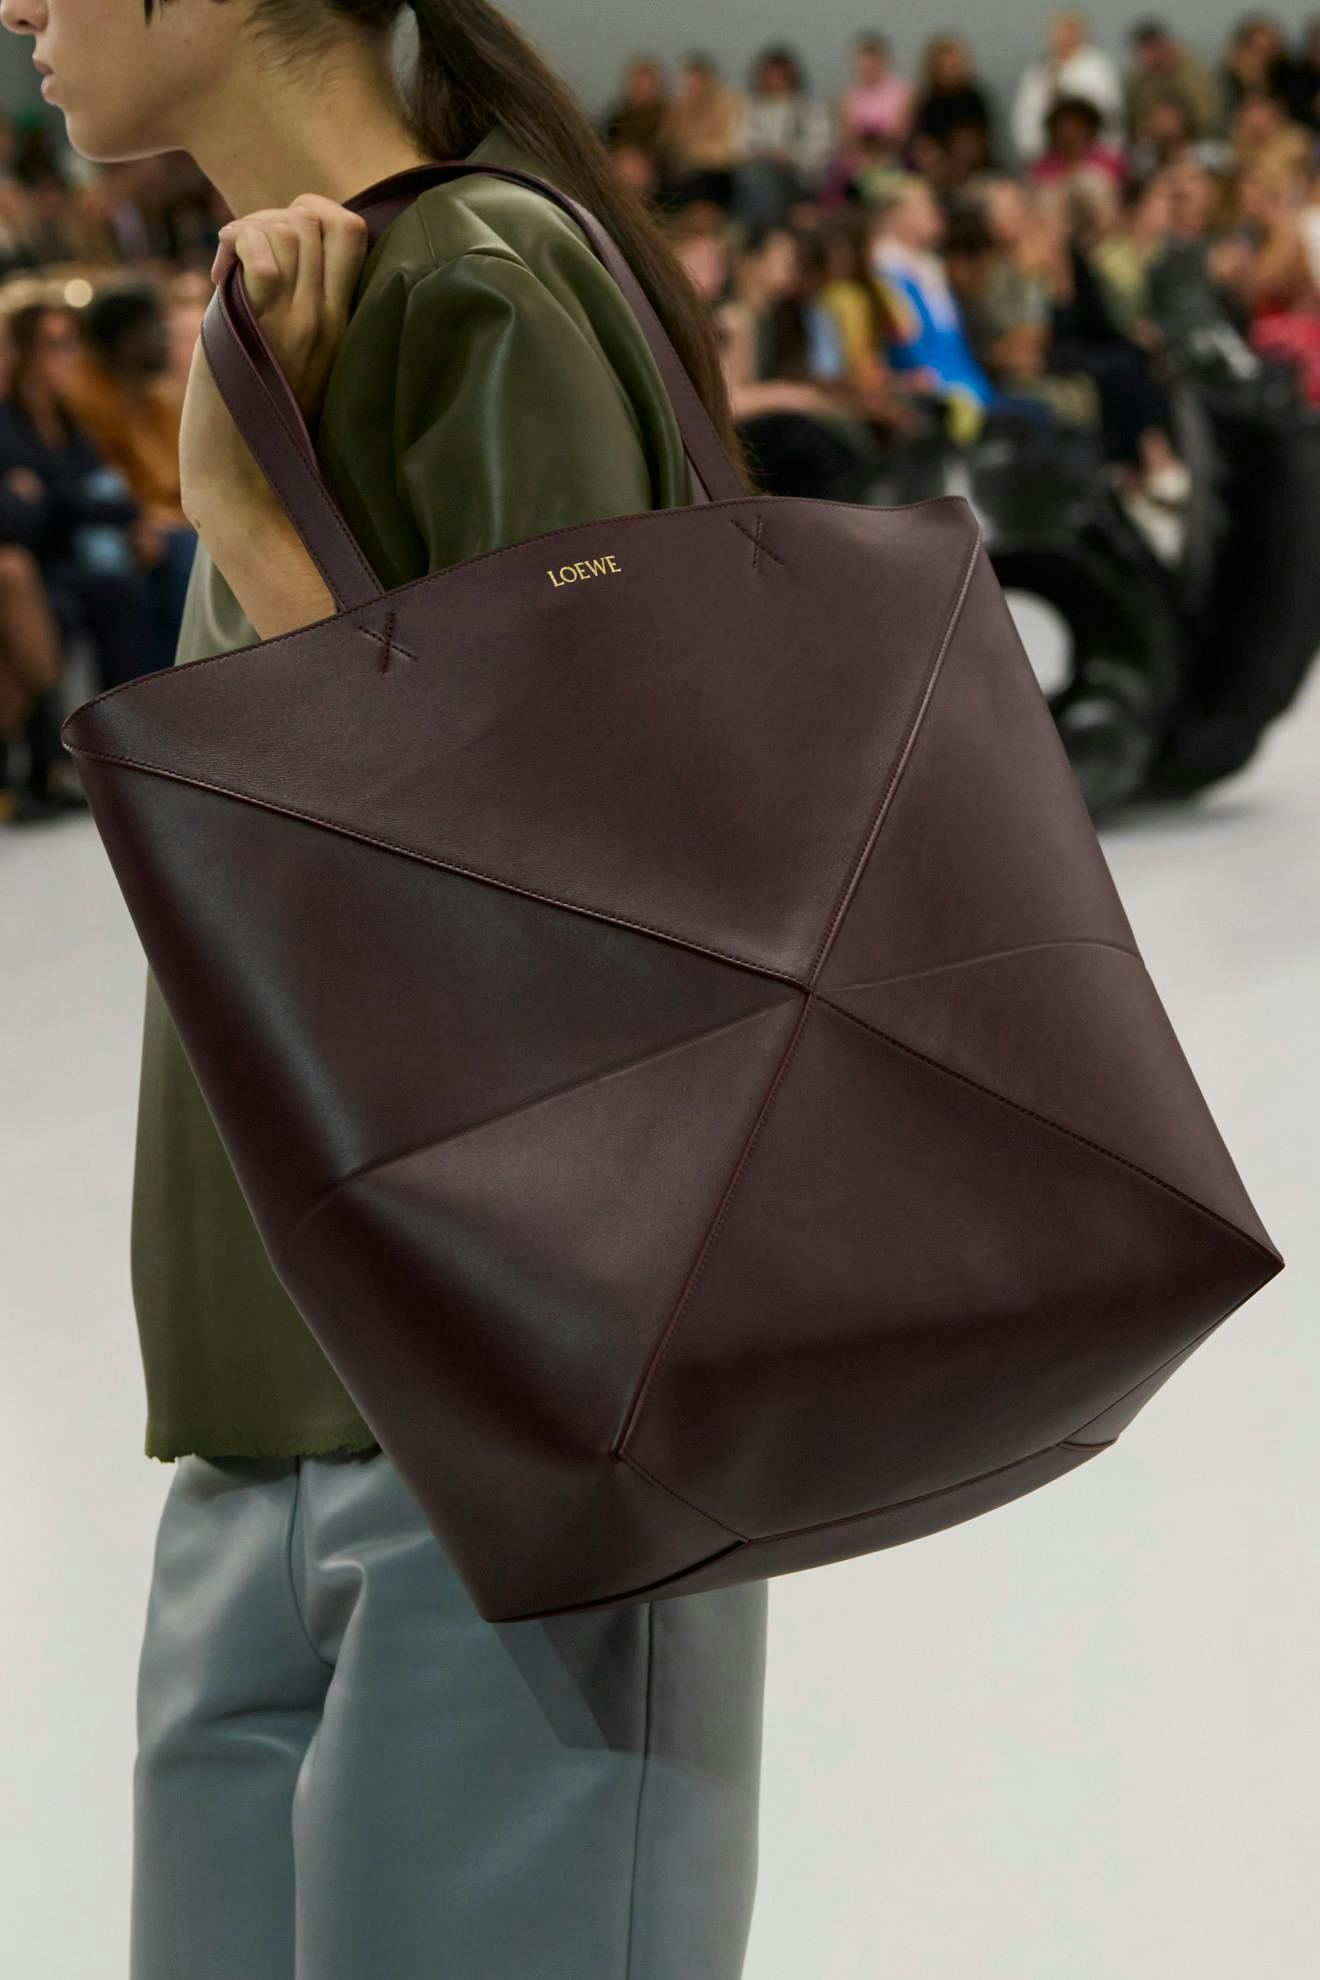 accessories bag handbag purse tote bag person face head